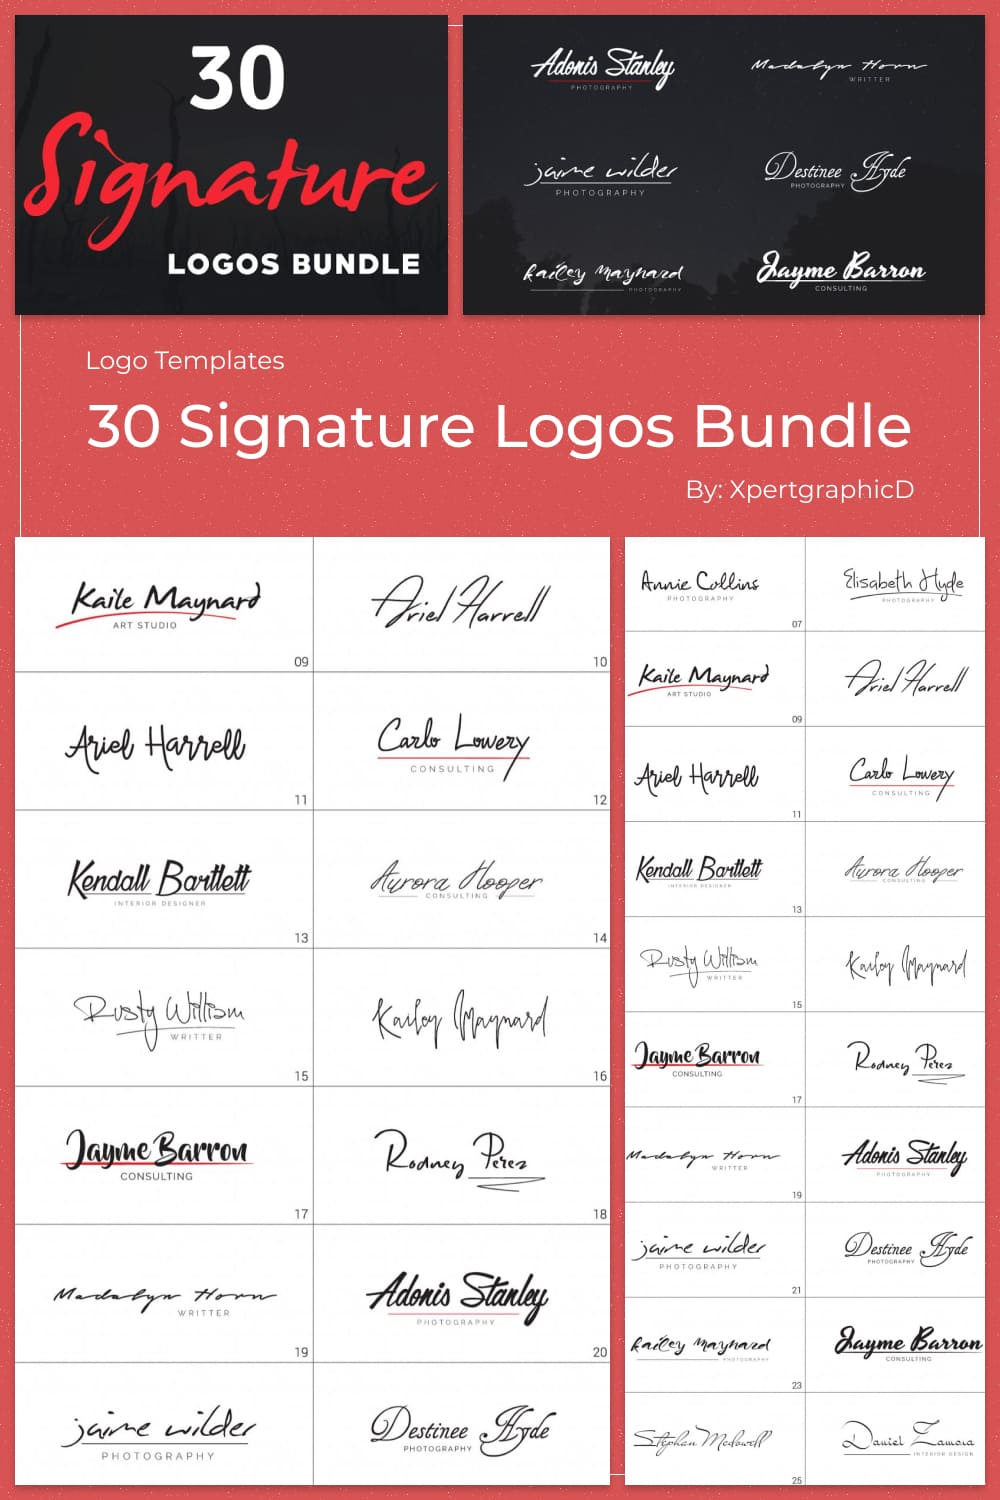 Signature Logos Bundle Pinterest.